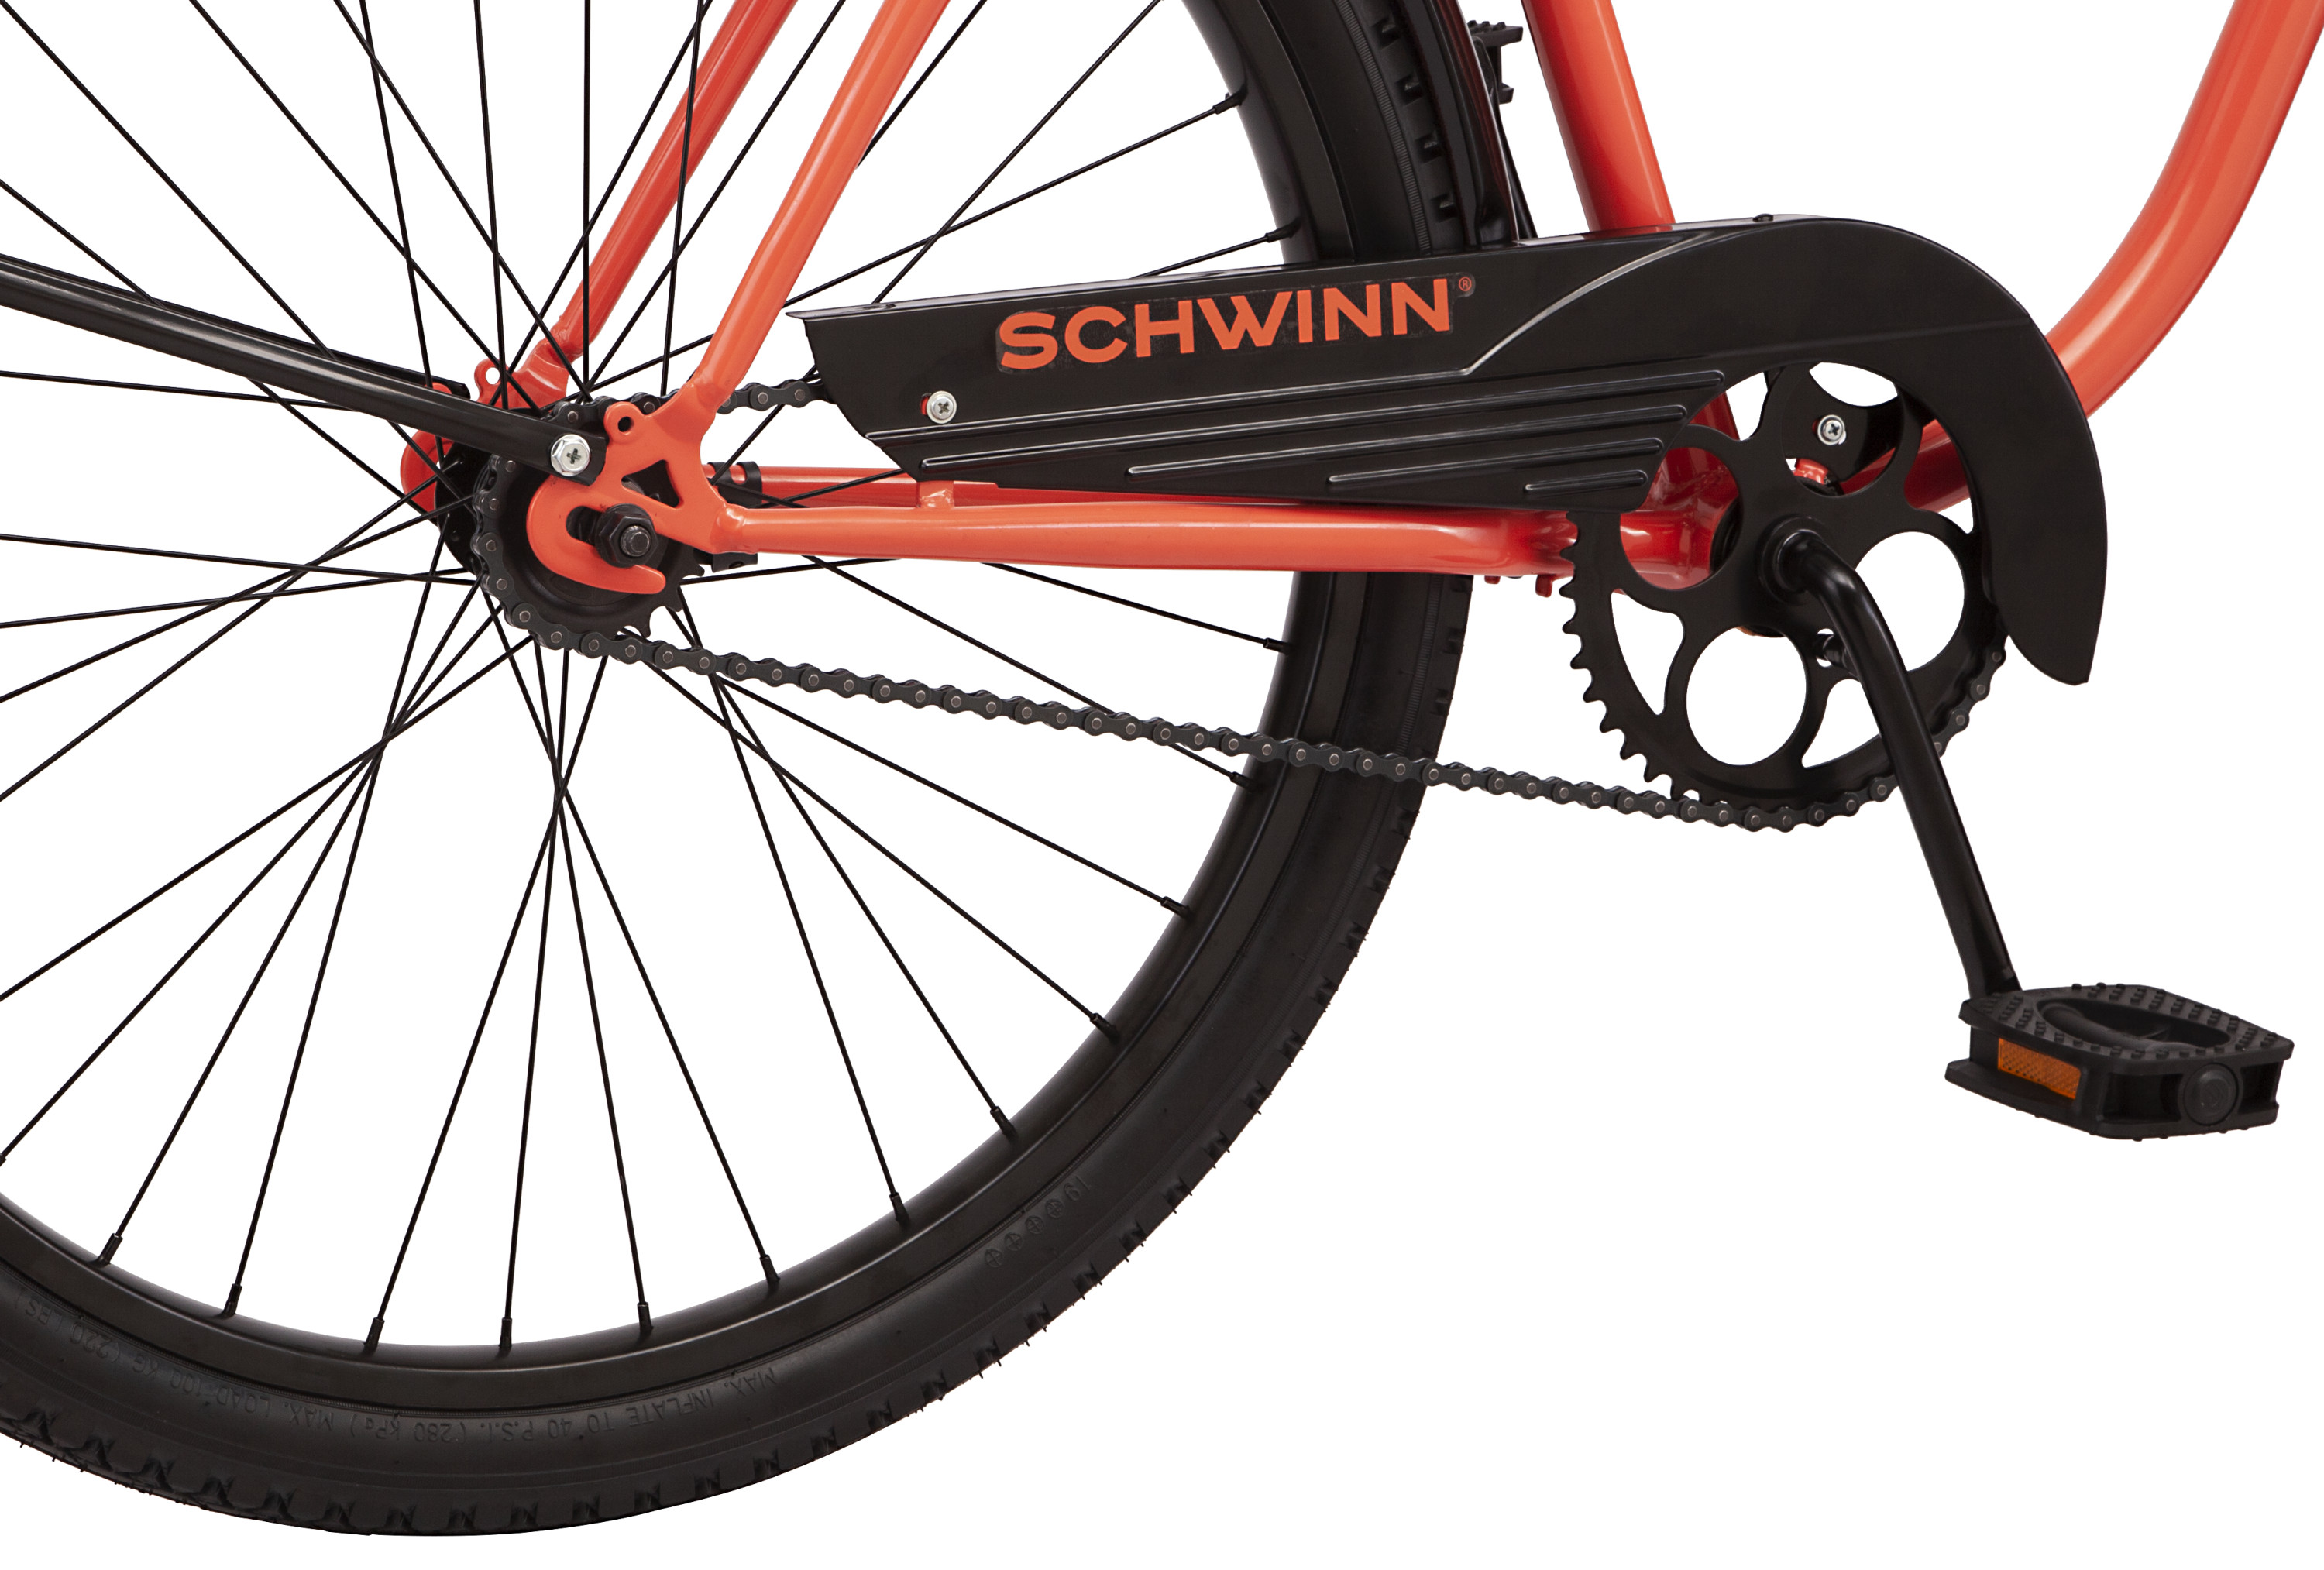 Schwinn Siesta cruiser bike, single speed, 26-inch wheels, coral, womens style - image 4 of 8